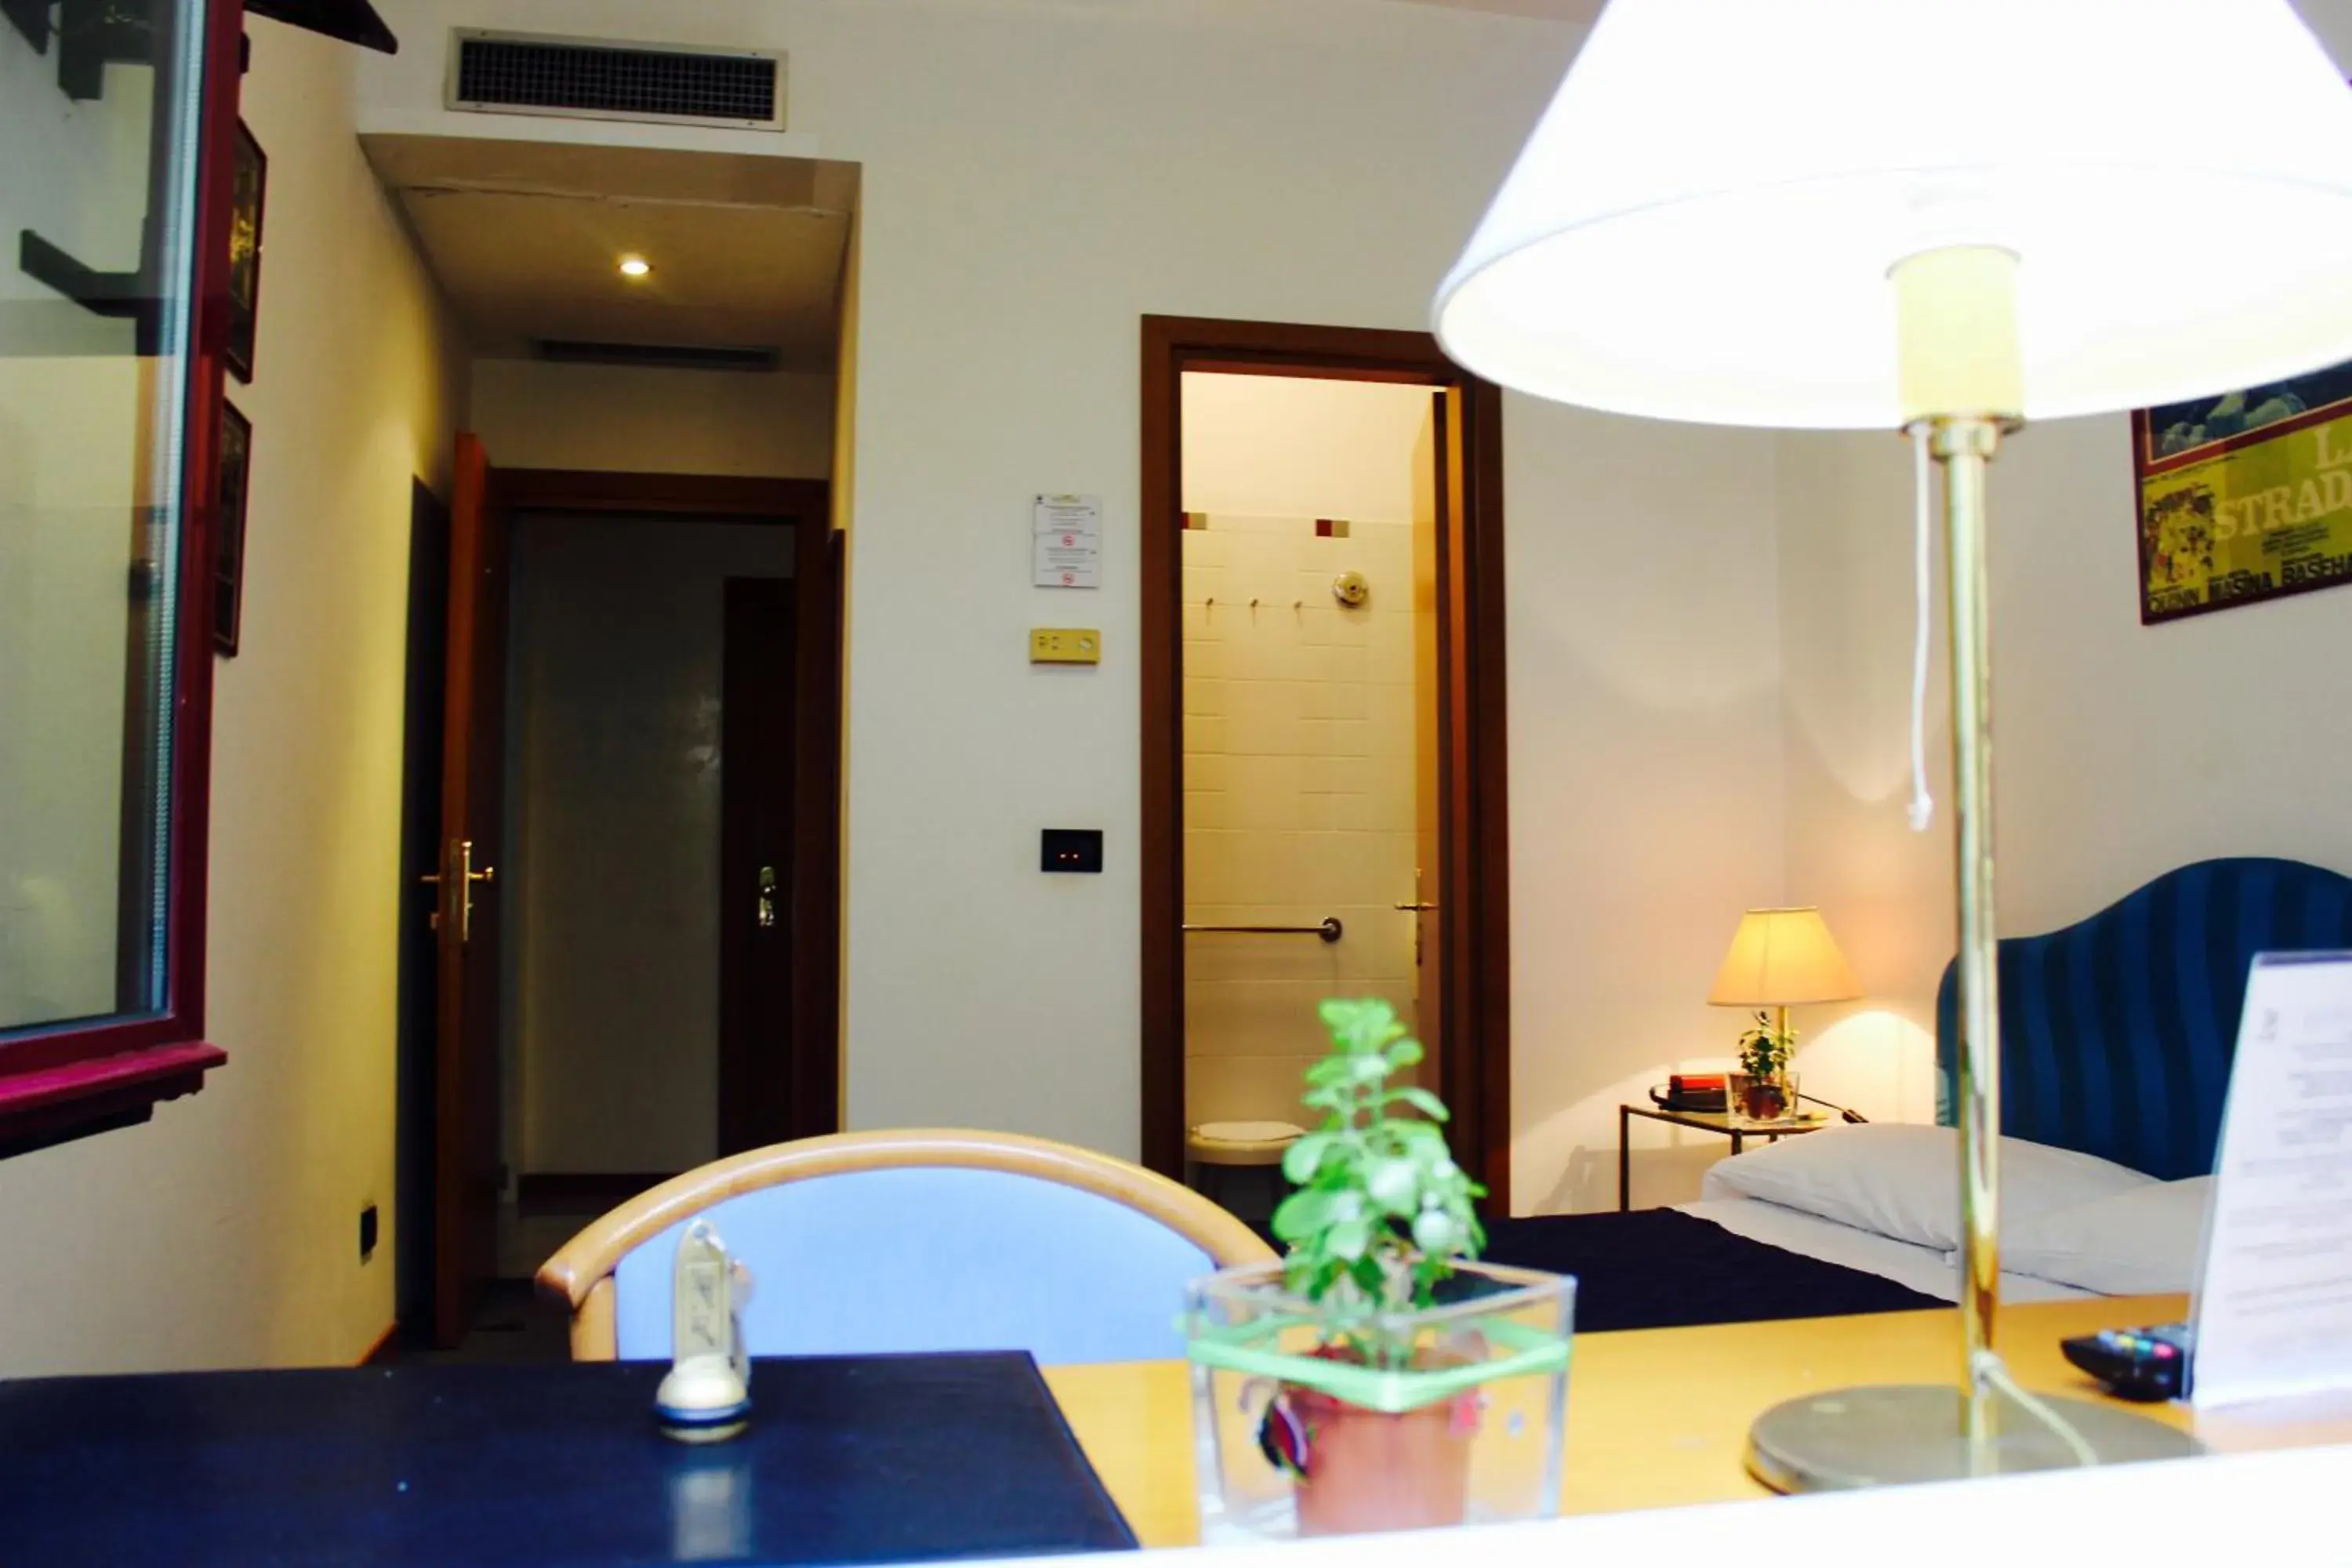 Bathroom, Dining Area in Hotel Arcangelo